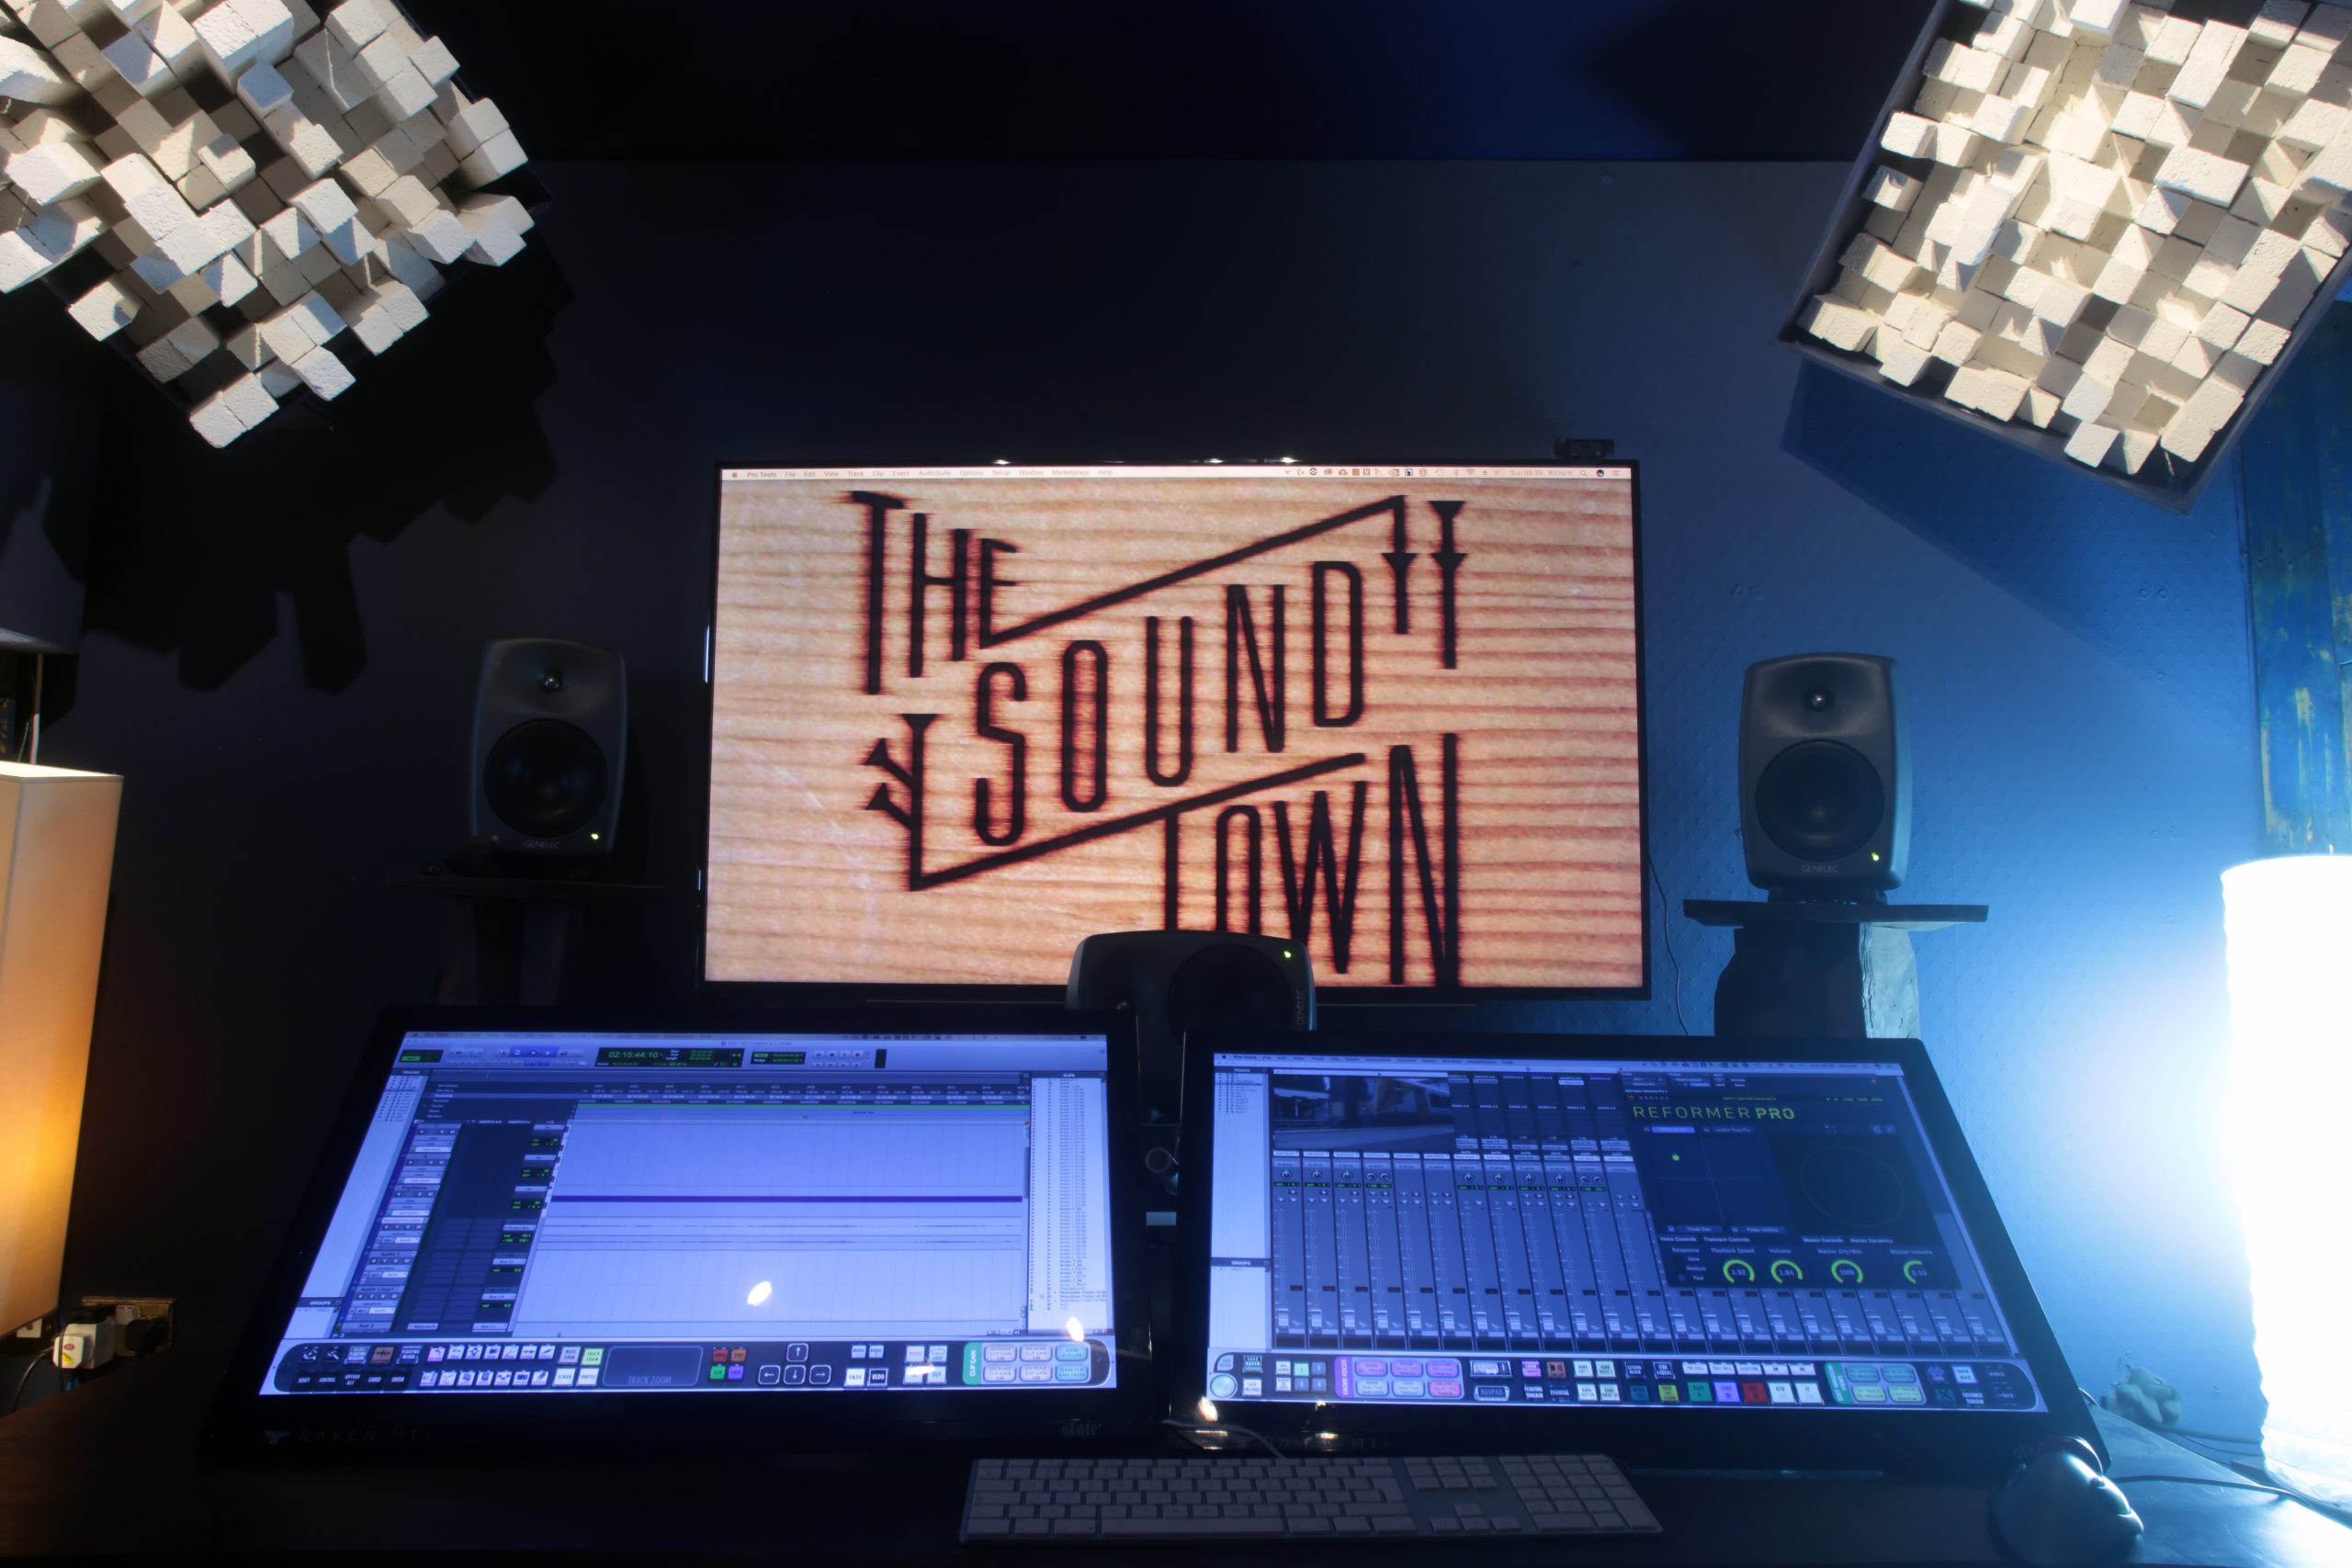 The Sound Town studio